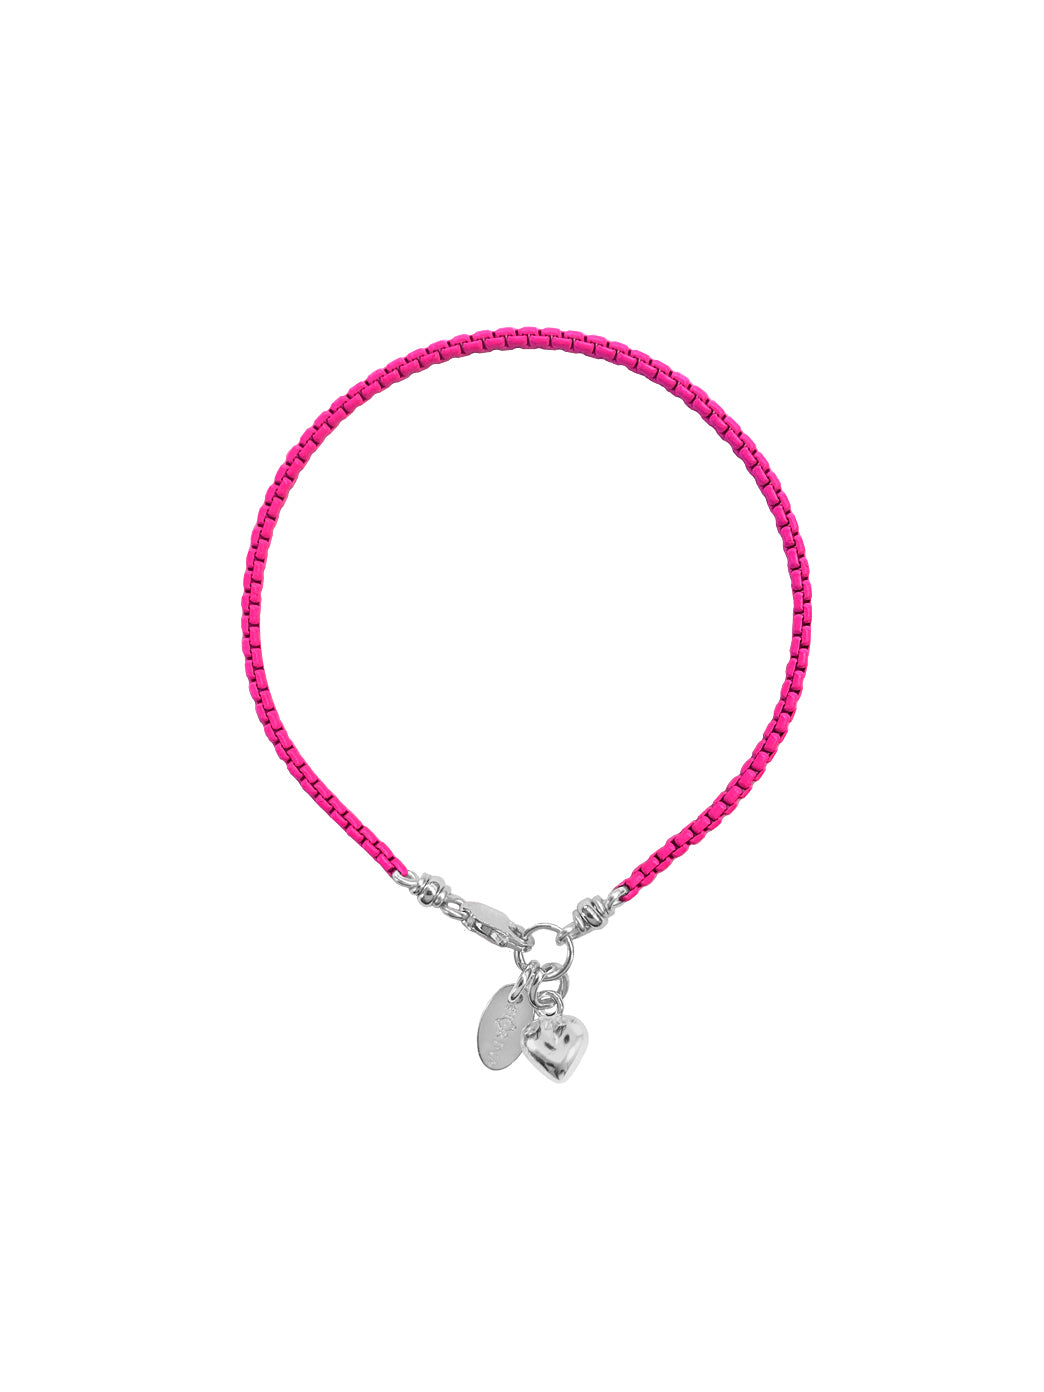 Fiorina Jewellery Wham Bracelet Neon Pink Heart